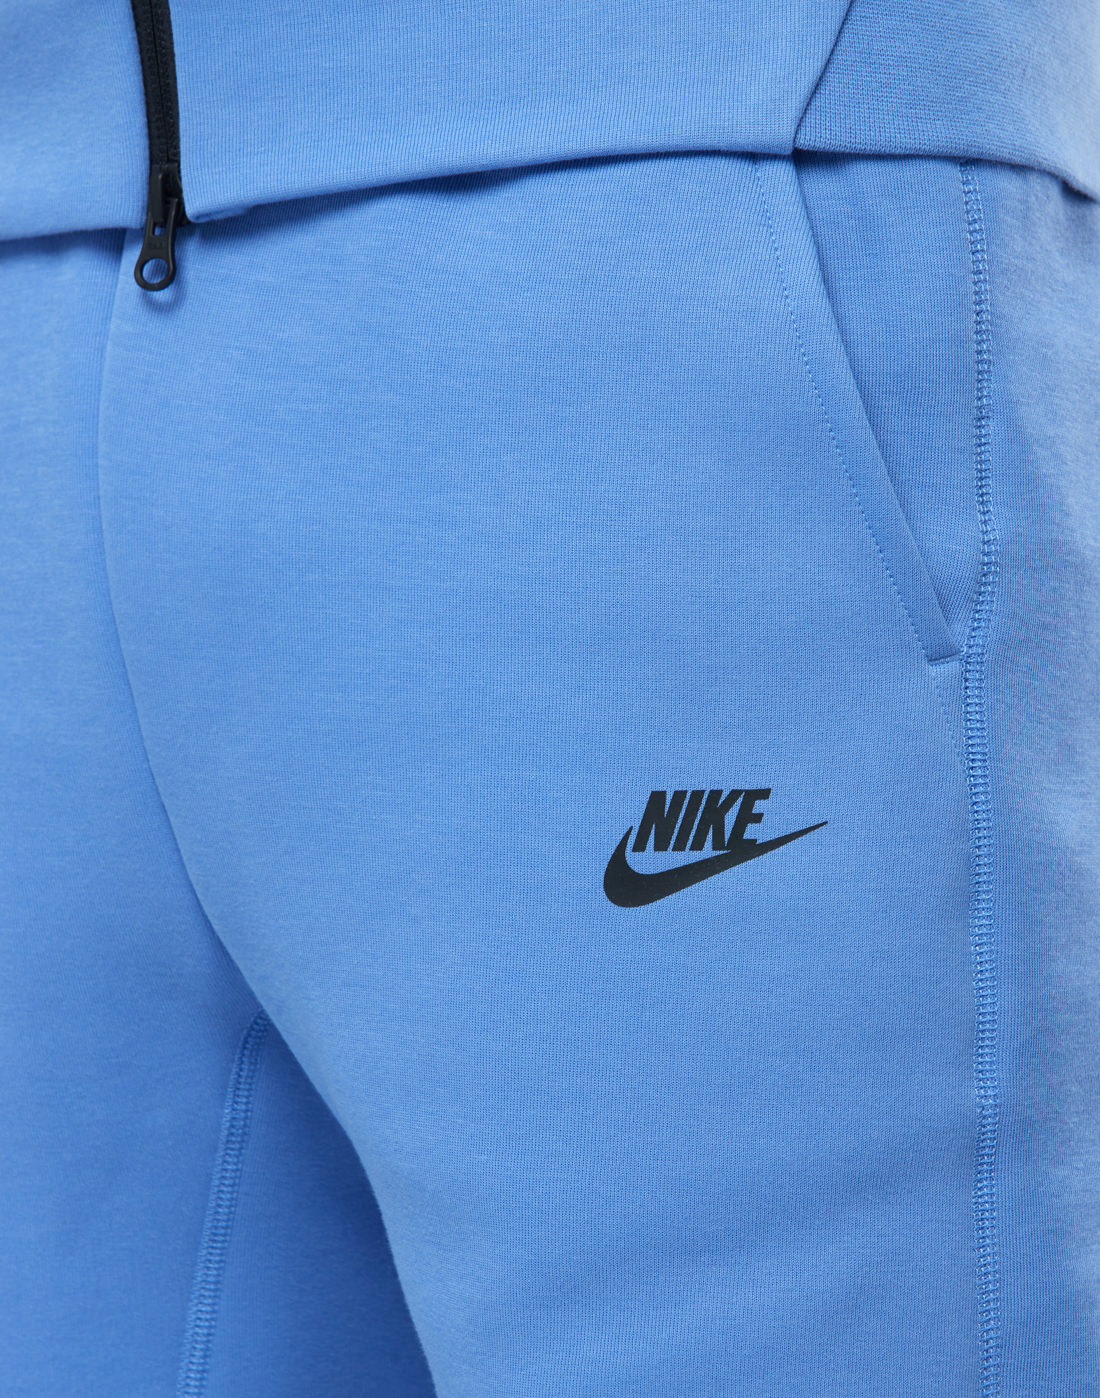 Nike Mens Tech Fleece Pants - Blue | Life Style Sports IE